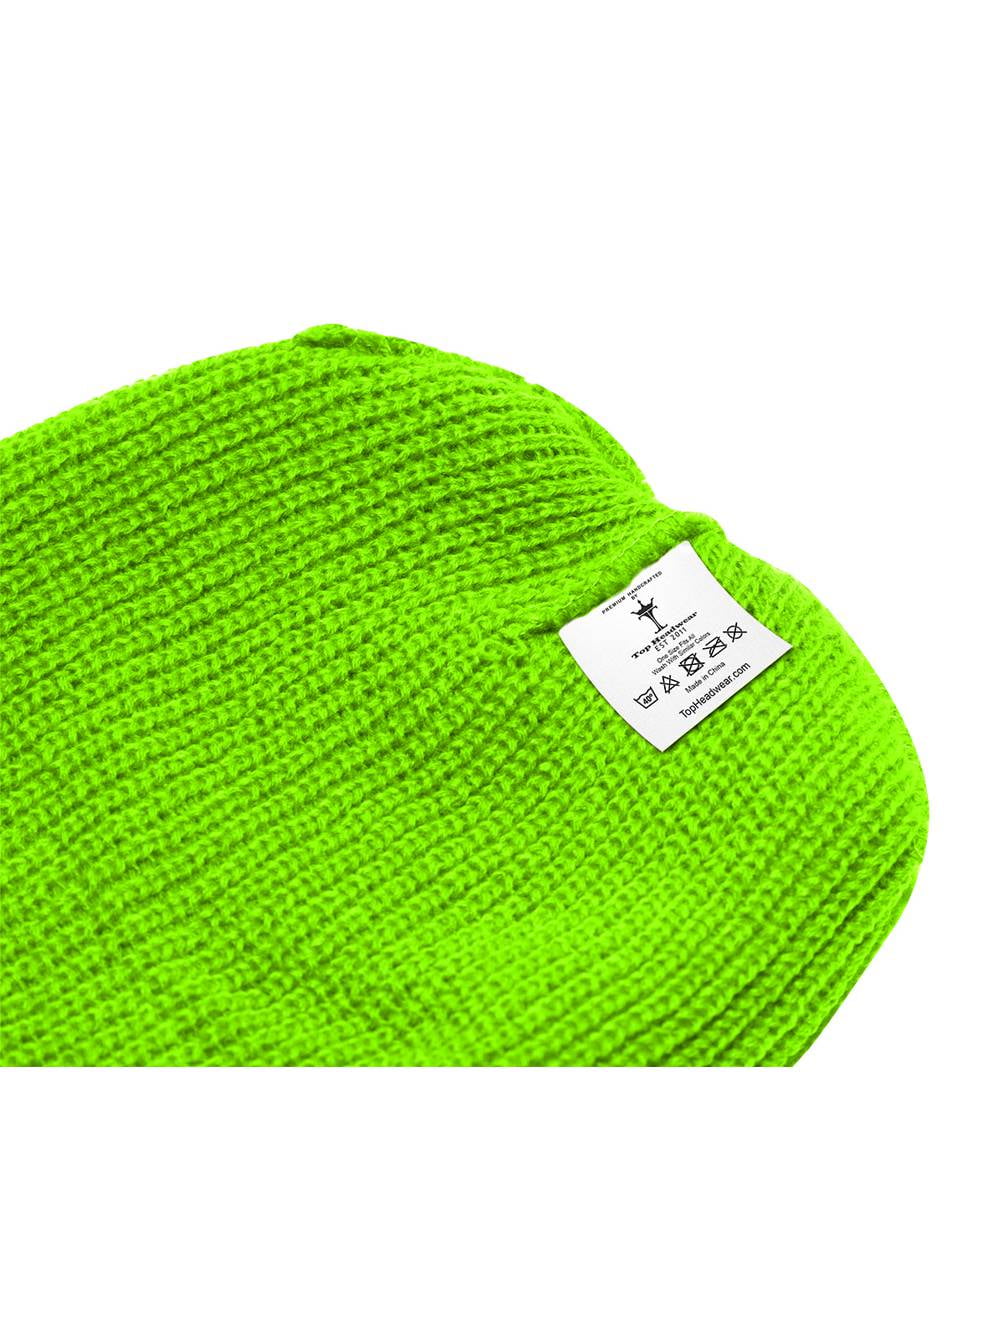 TopHeadwear's 3 Hole Face Ski Mask, Neon Green